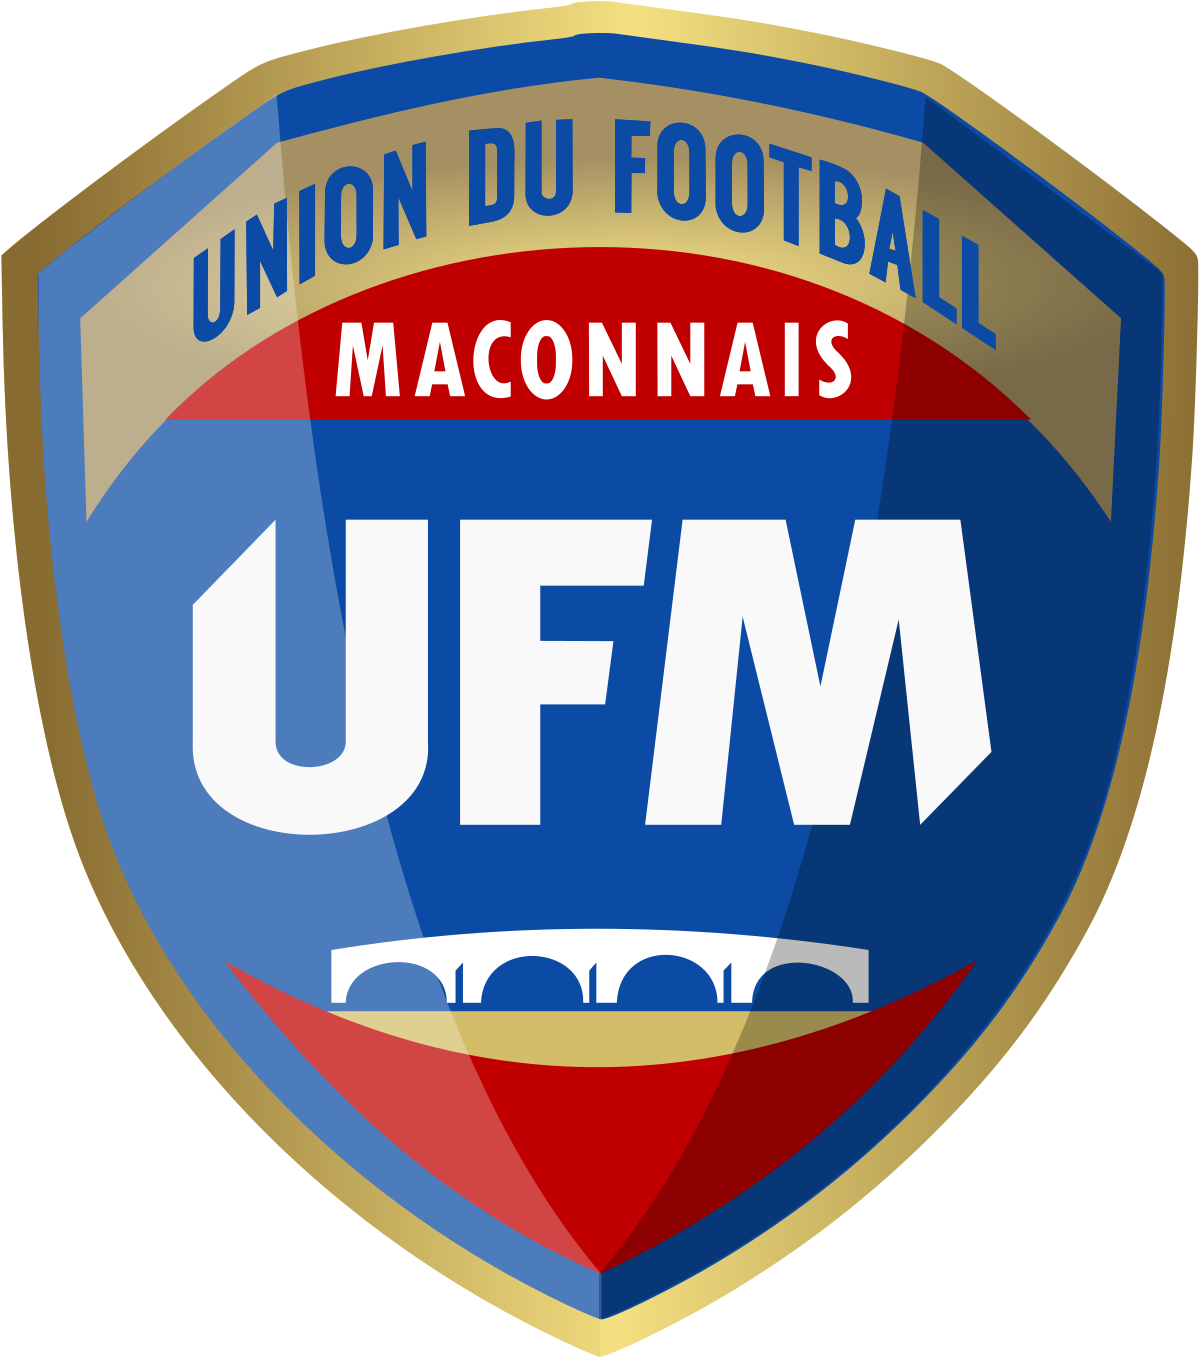 UF Maconnais team logo